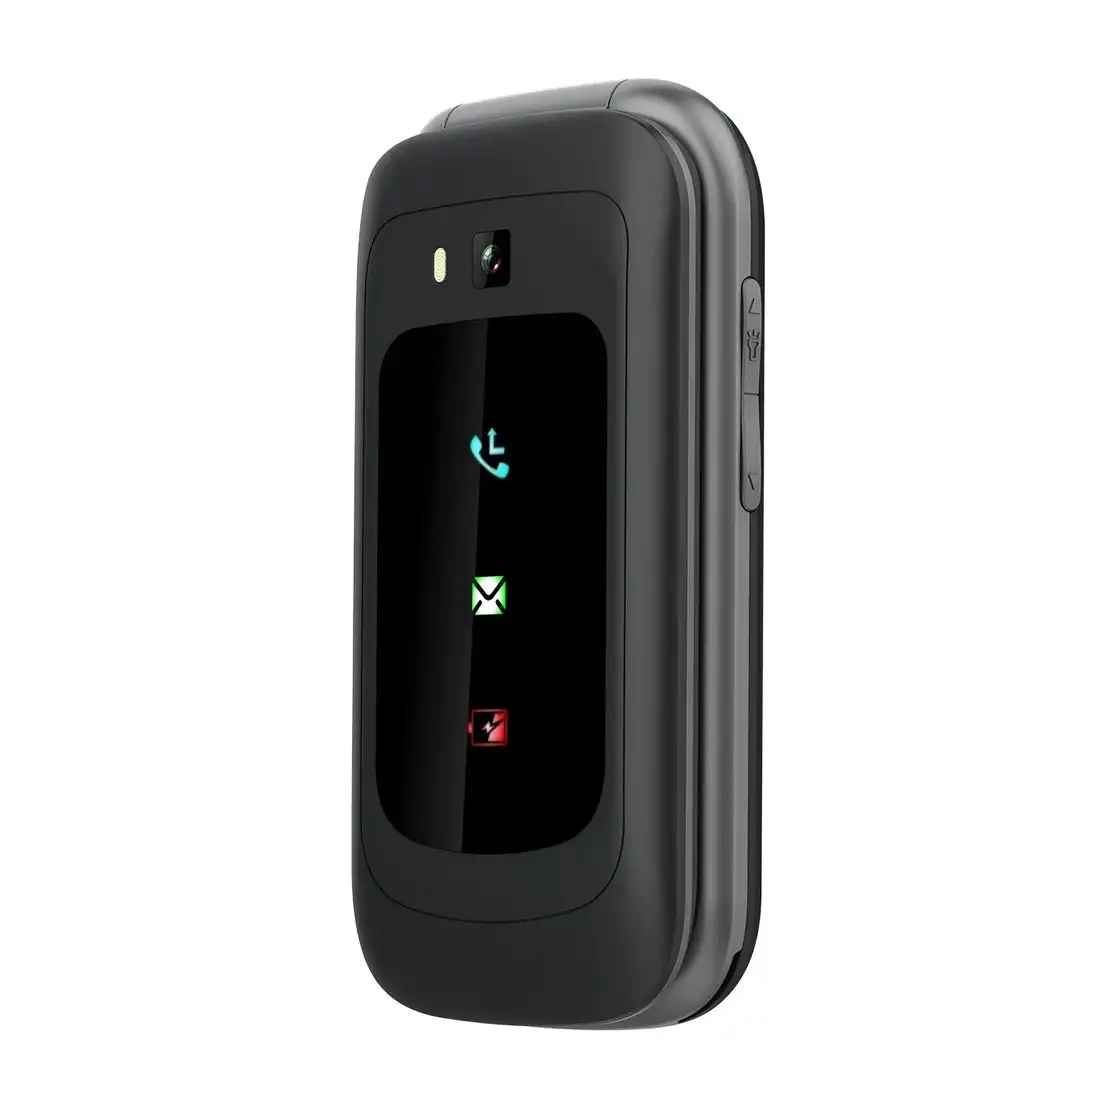 Opel Mobile 4G TouchFlip (Bonus $25 SIM Card, 2.8'', Big Button, Flip Phone) - Black